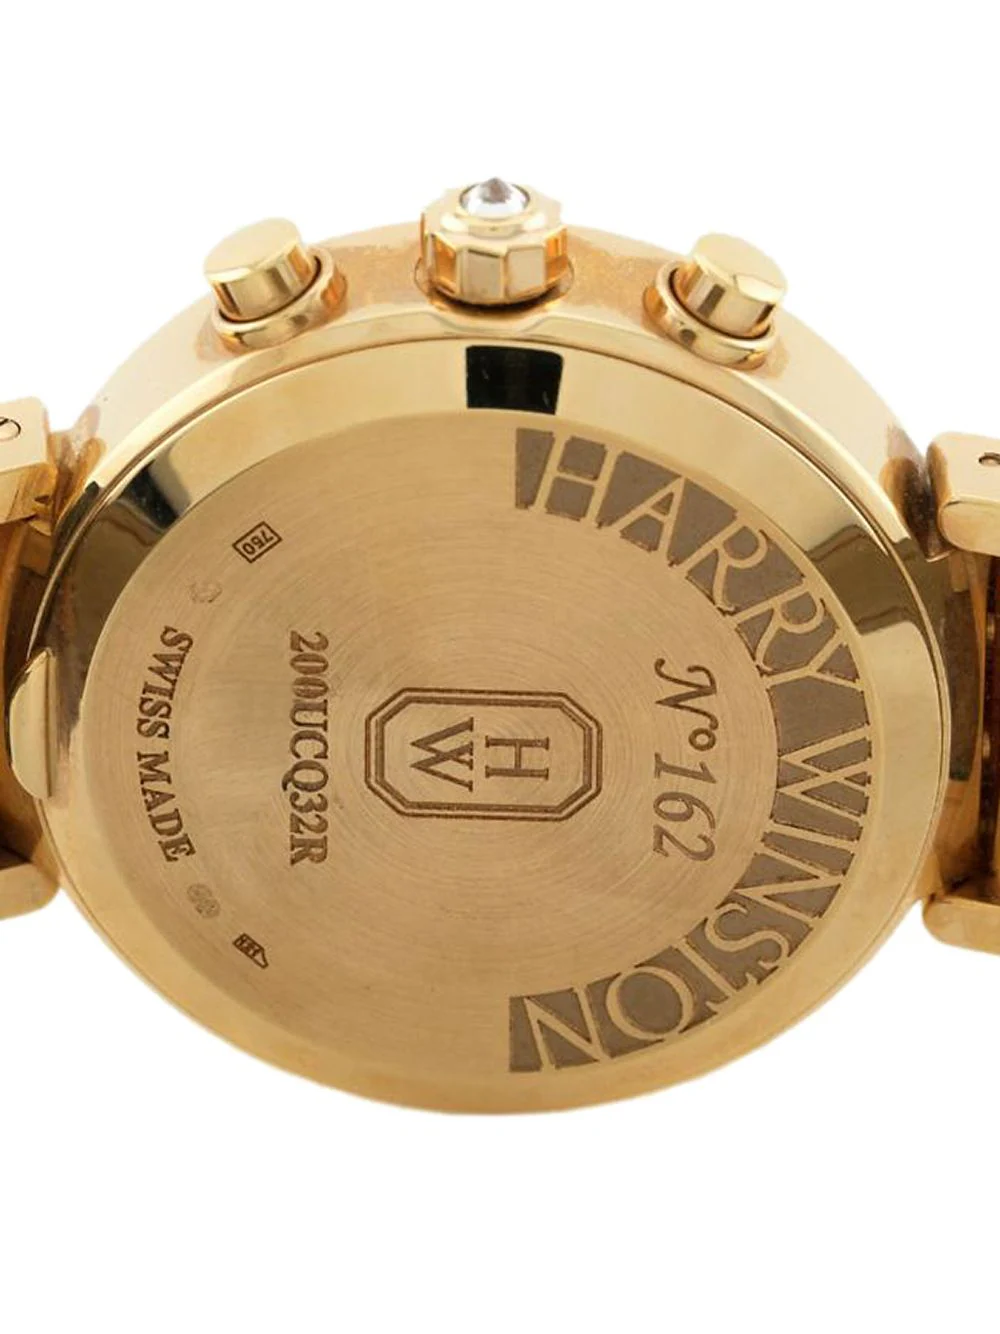 Harry Winston Premier Chronograph 18K Rose Gold & Diamonds Lady's Watch